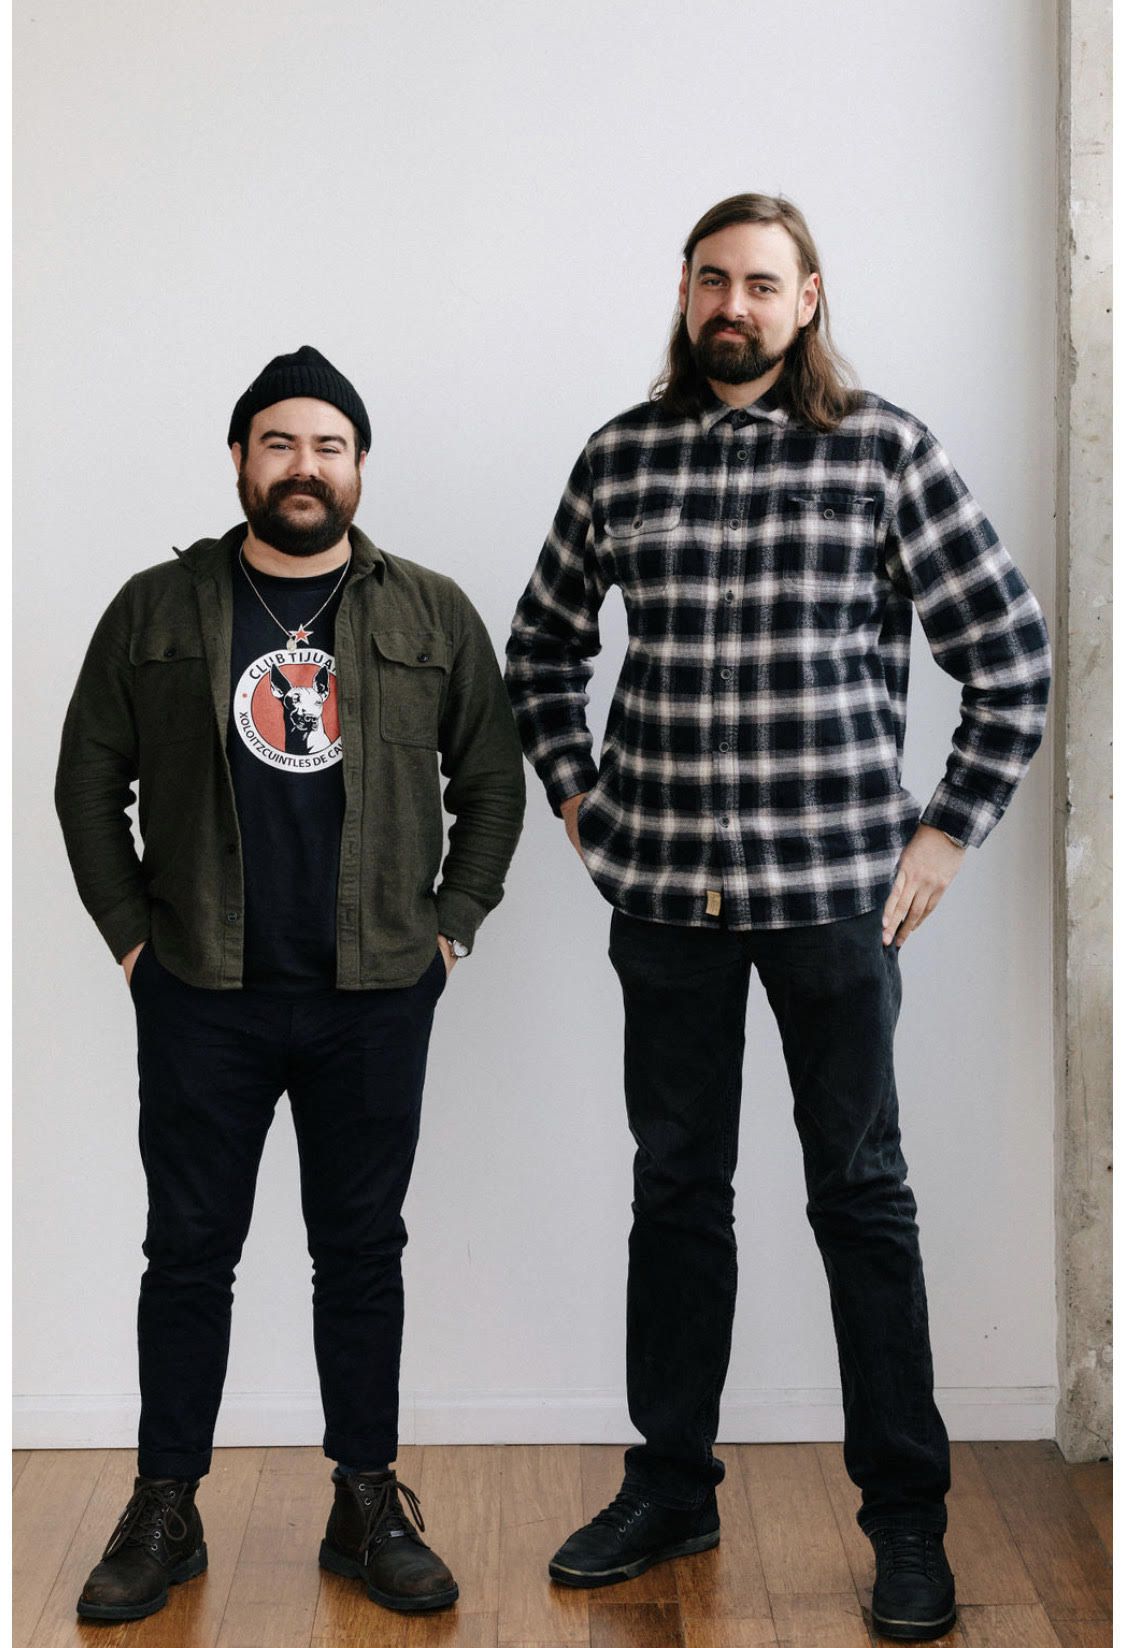 Low Bar founders Matt Meyer (left) and Daniel Paez